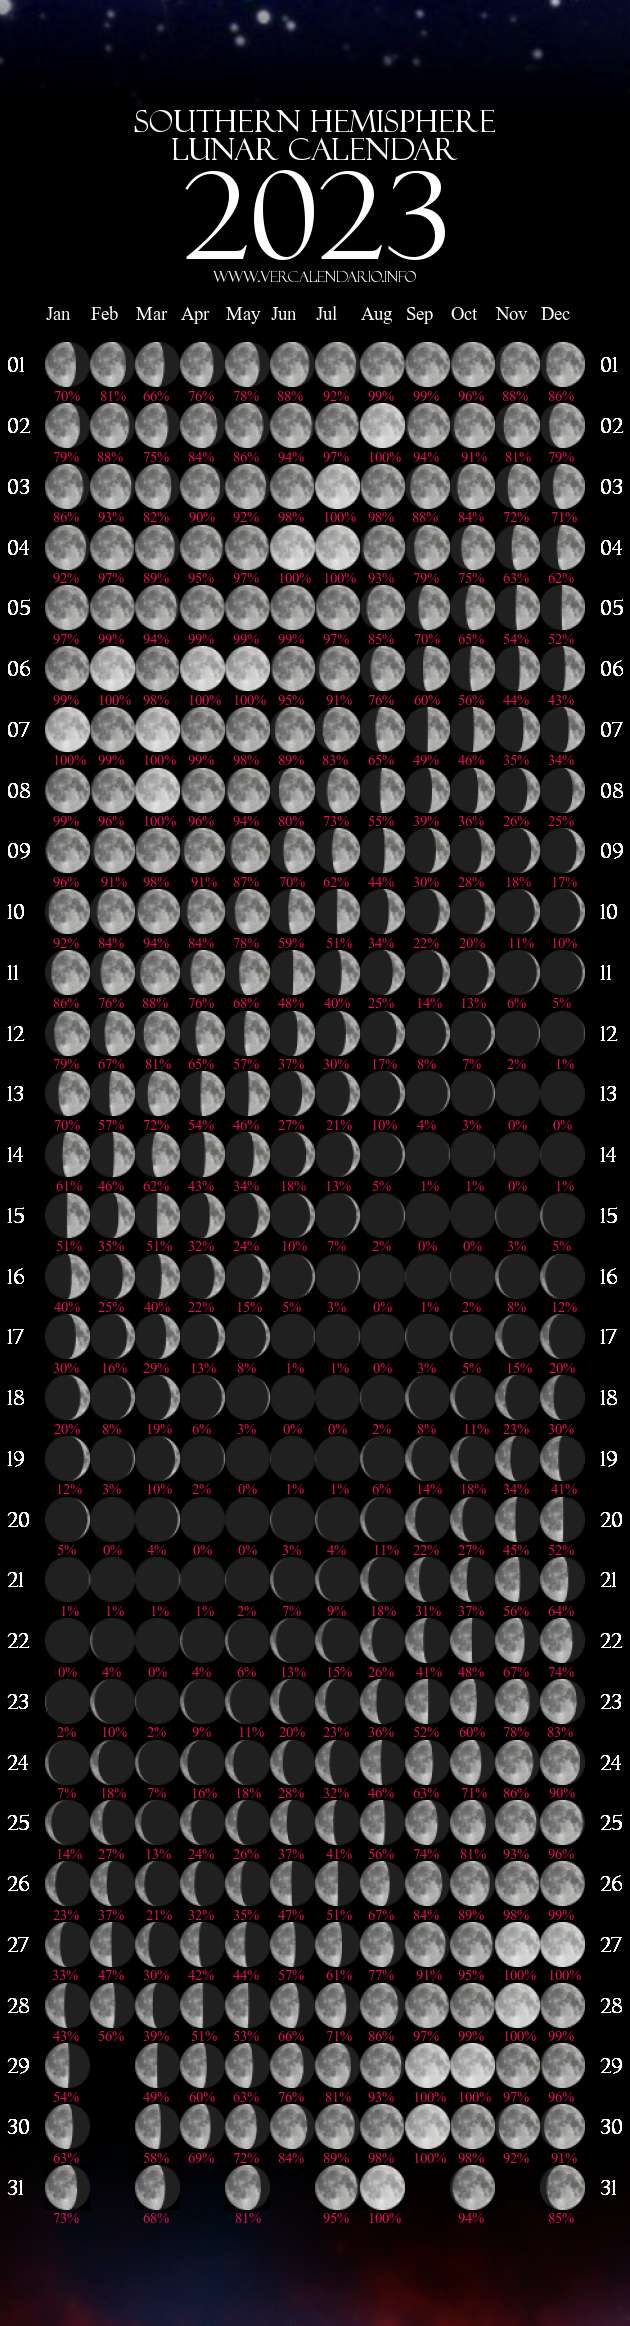 full-moon-calendar-2023-advancefiber-in